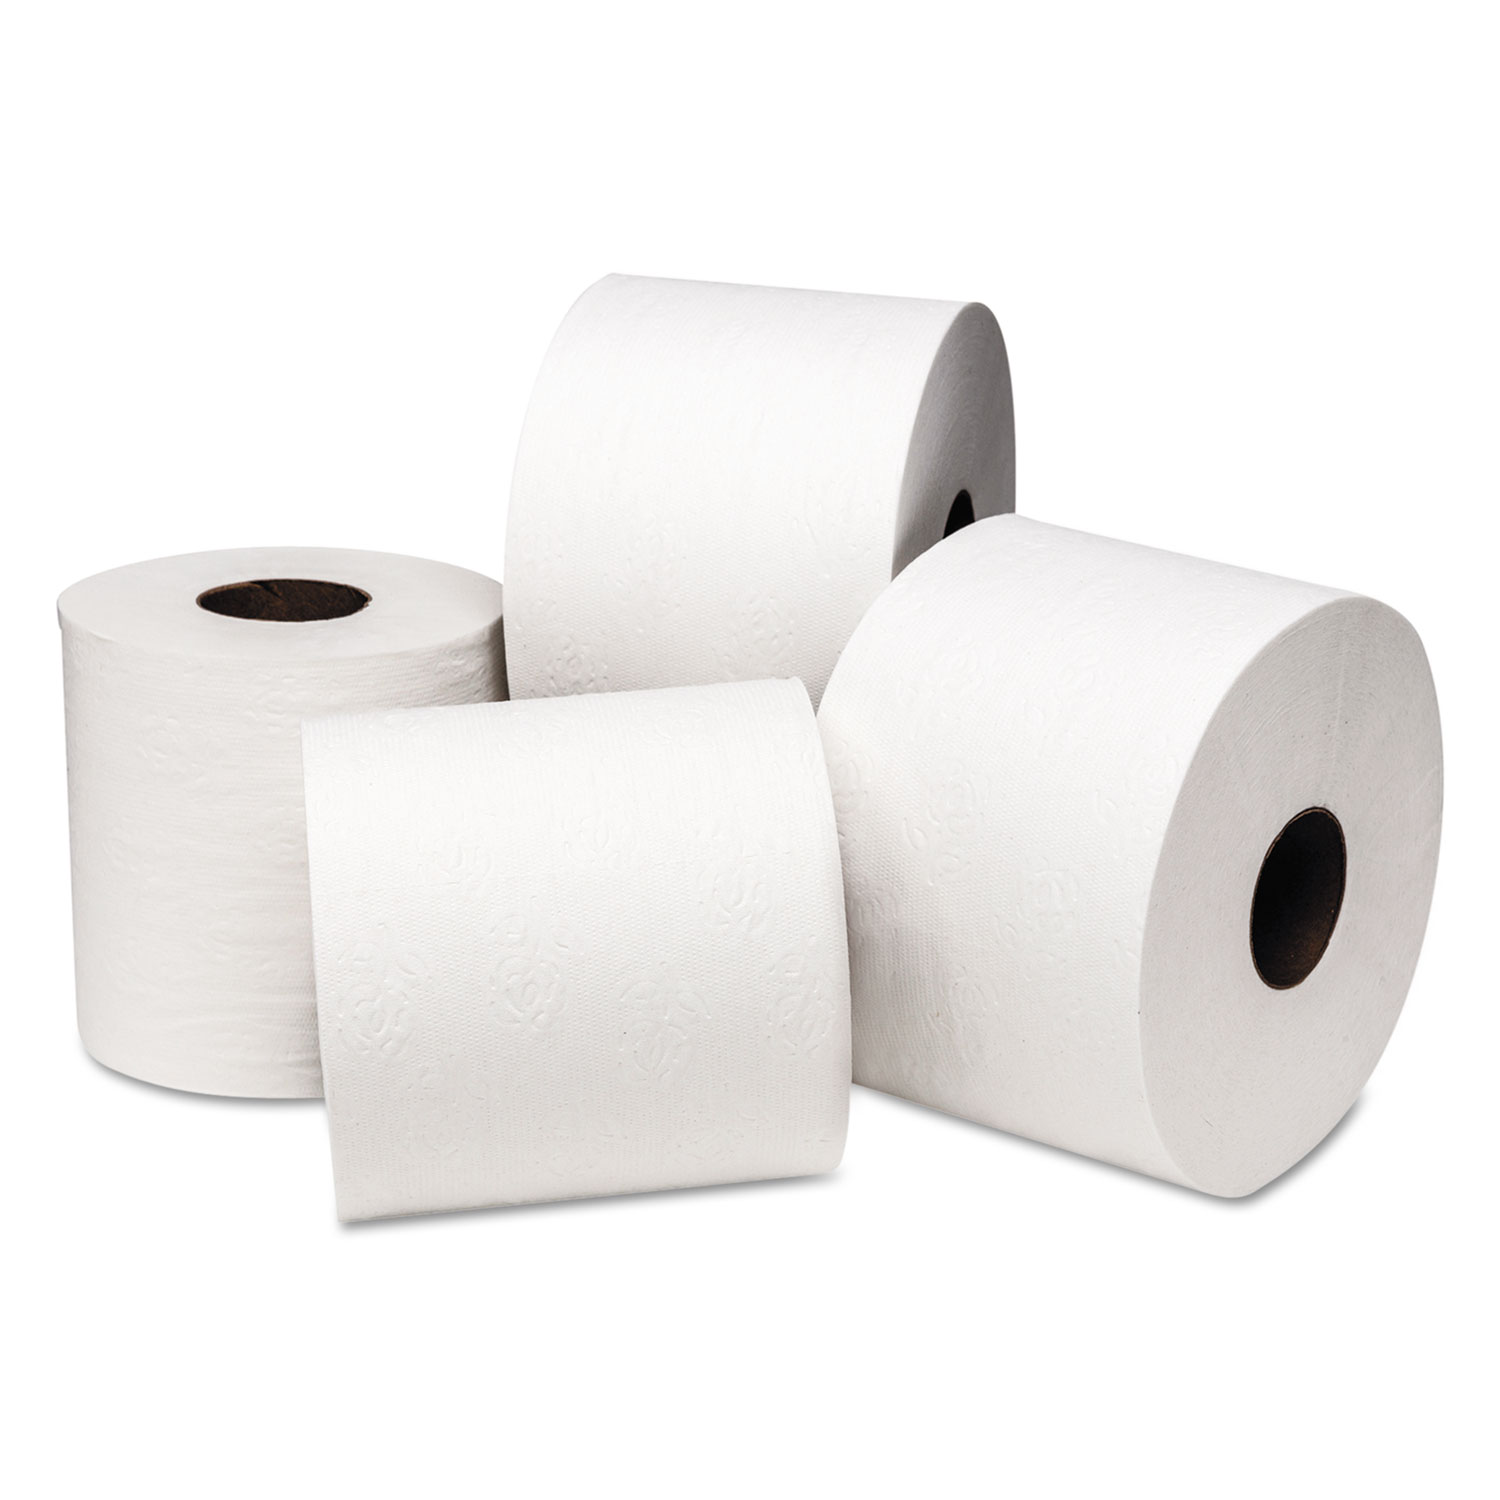 Advanced Bath Tissue, 2-Ply, White, 500 Sheets/Roll, 48 Rolls/Carton